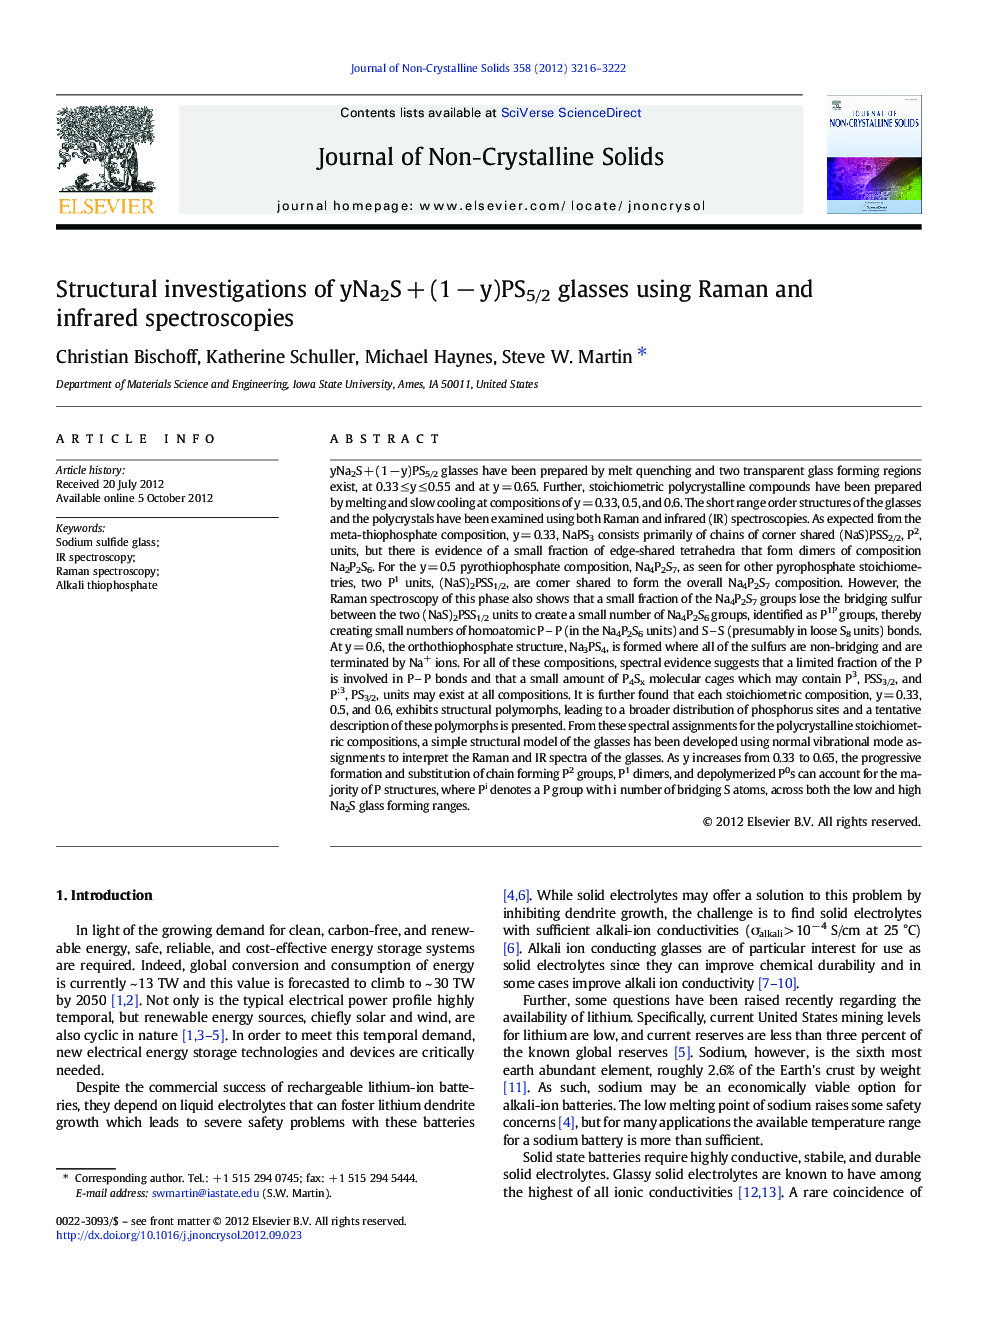 Structural investigations of yNa2SÂ +Â (1Â âÂ y)PS5/2 glasses using Raman and infrared spectroscopies